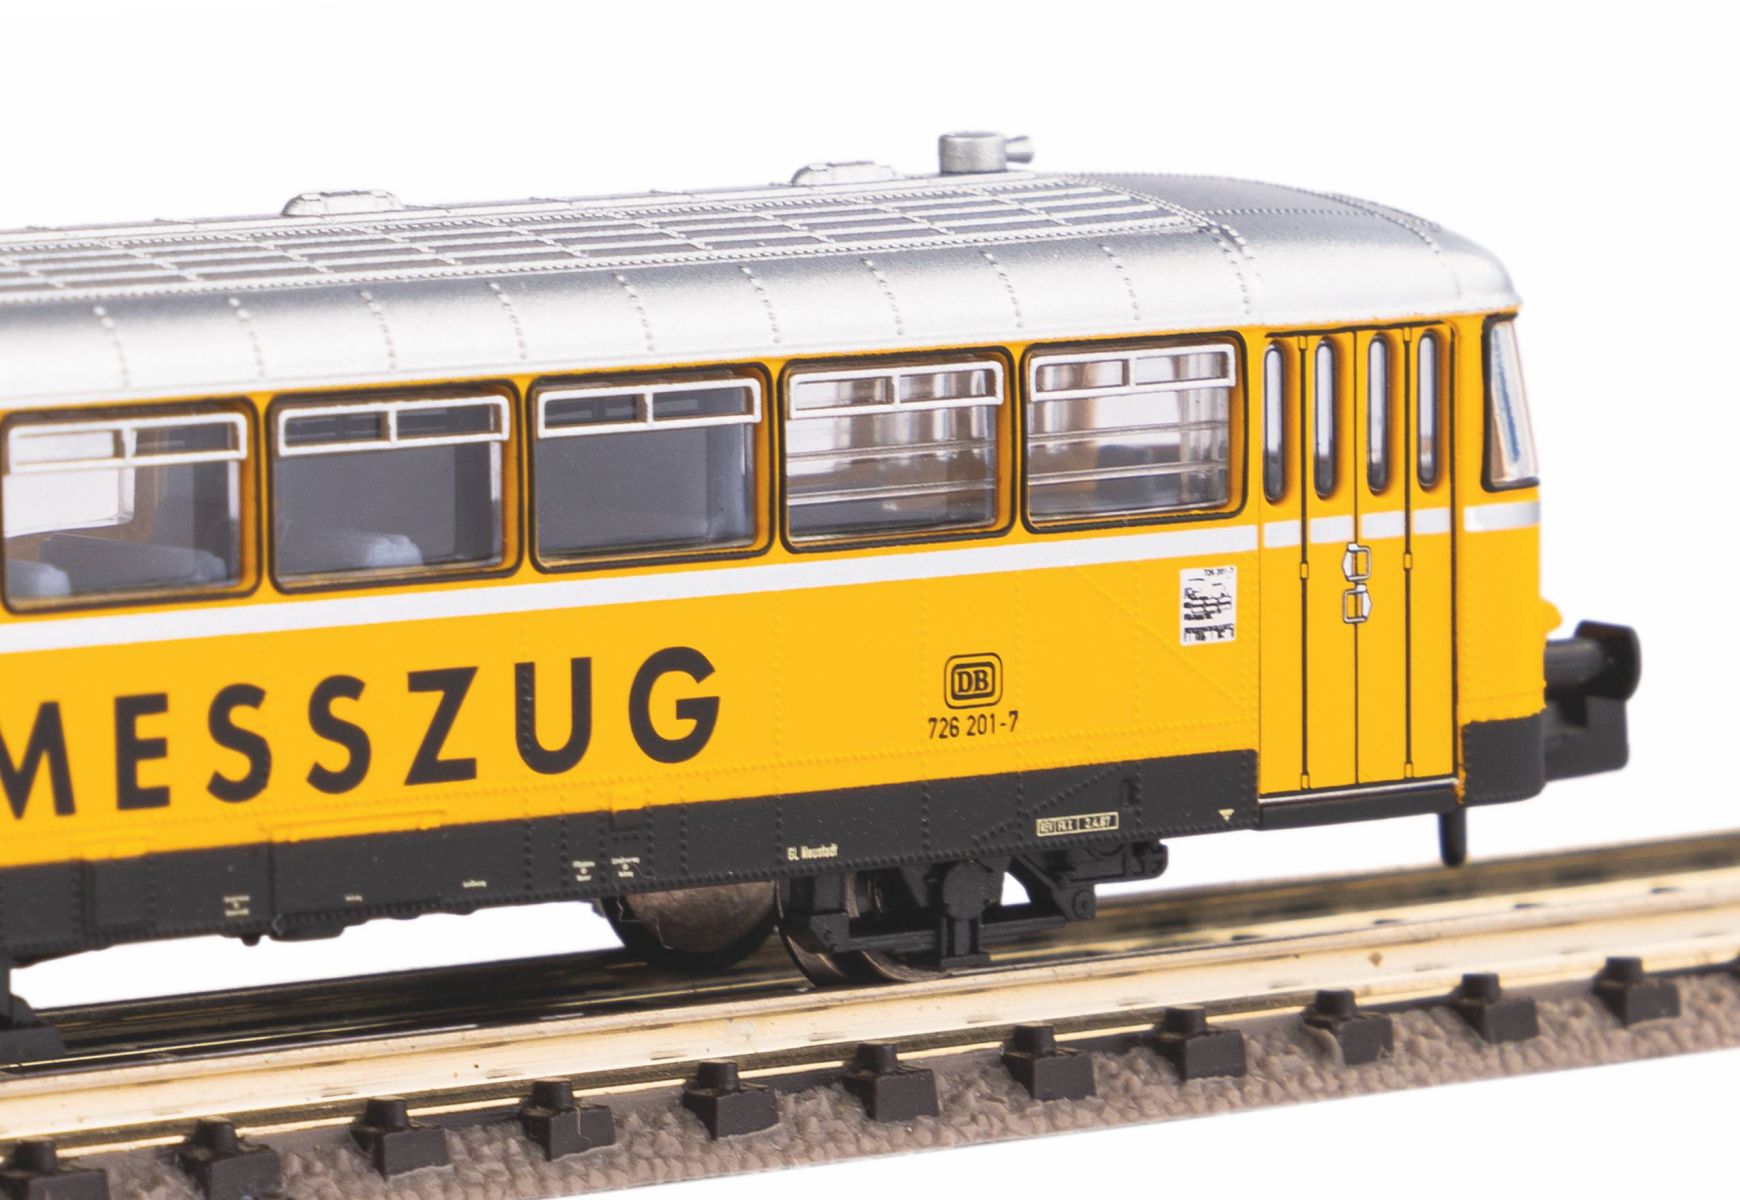 Piko 40254 - Triebwagen 'Gleismesszug', DBAG, Ep.V